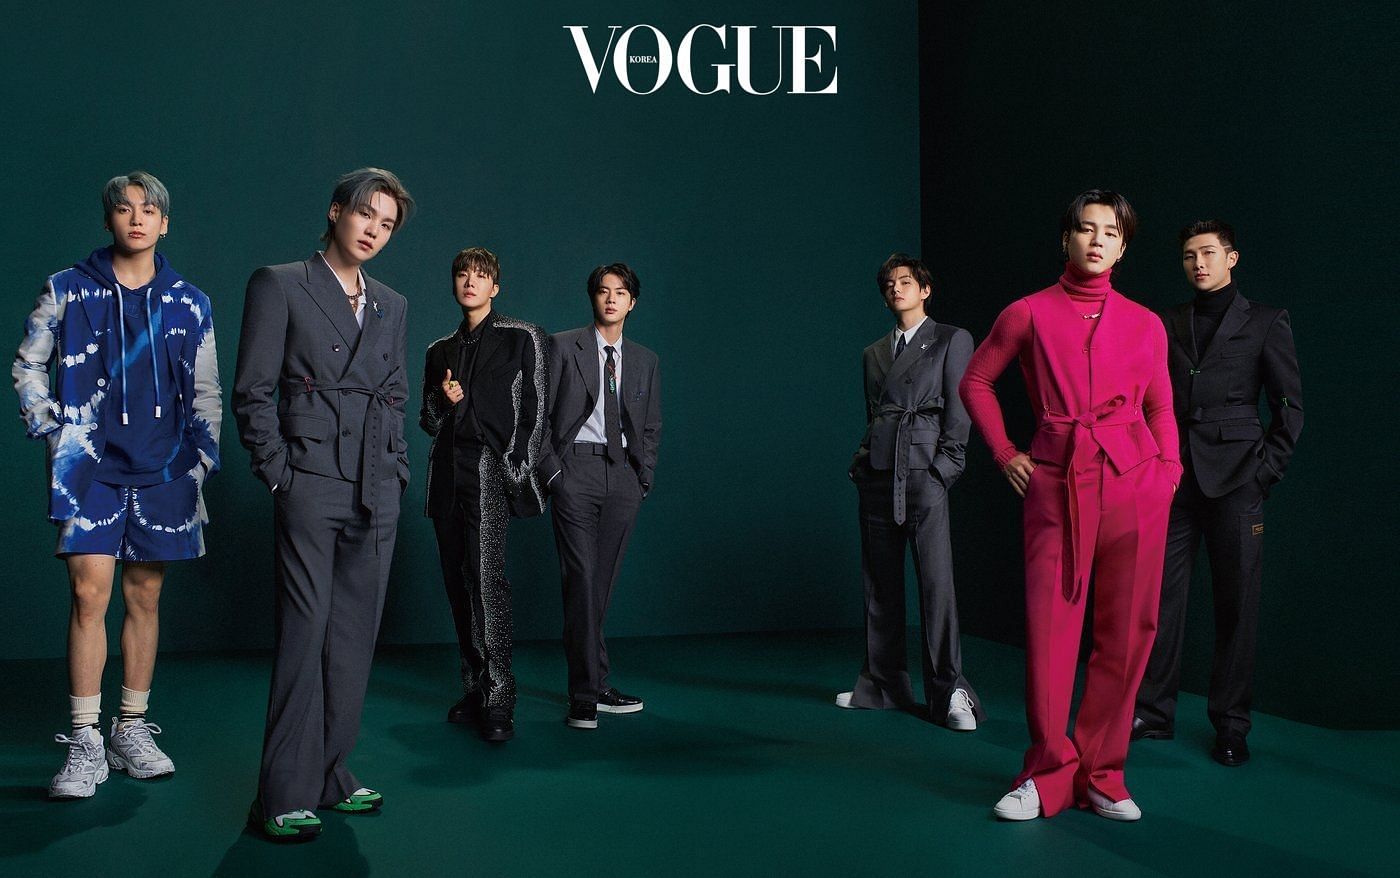 BTS takes on Vogue!  Photoshoot bts, Vogue photoshoot, Bts concept photo